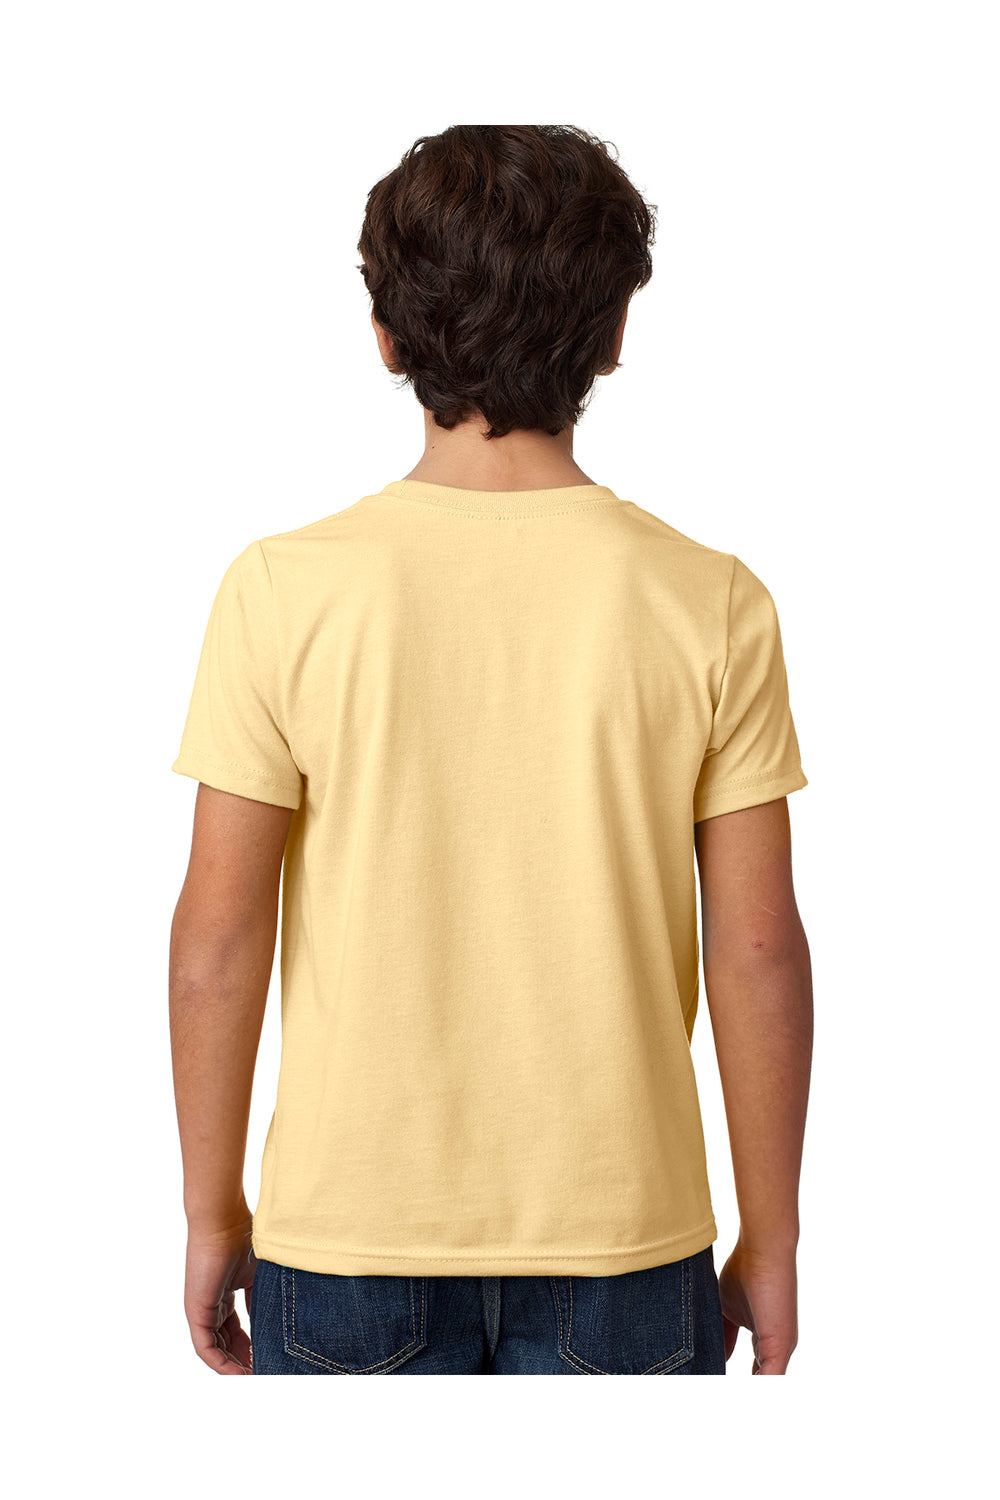 Next Level 3312 Youth CVC Jersey Short Sleeve Crewneck T-Shirt Yellow Back